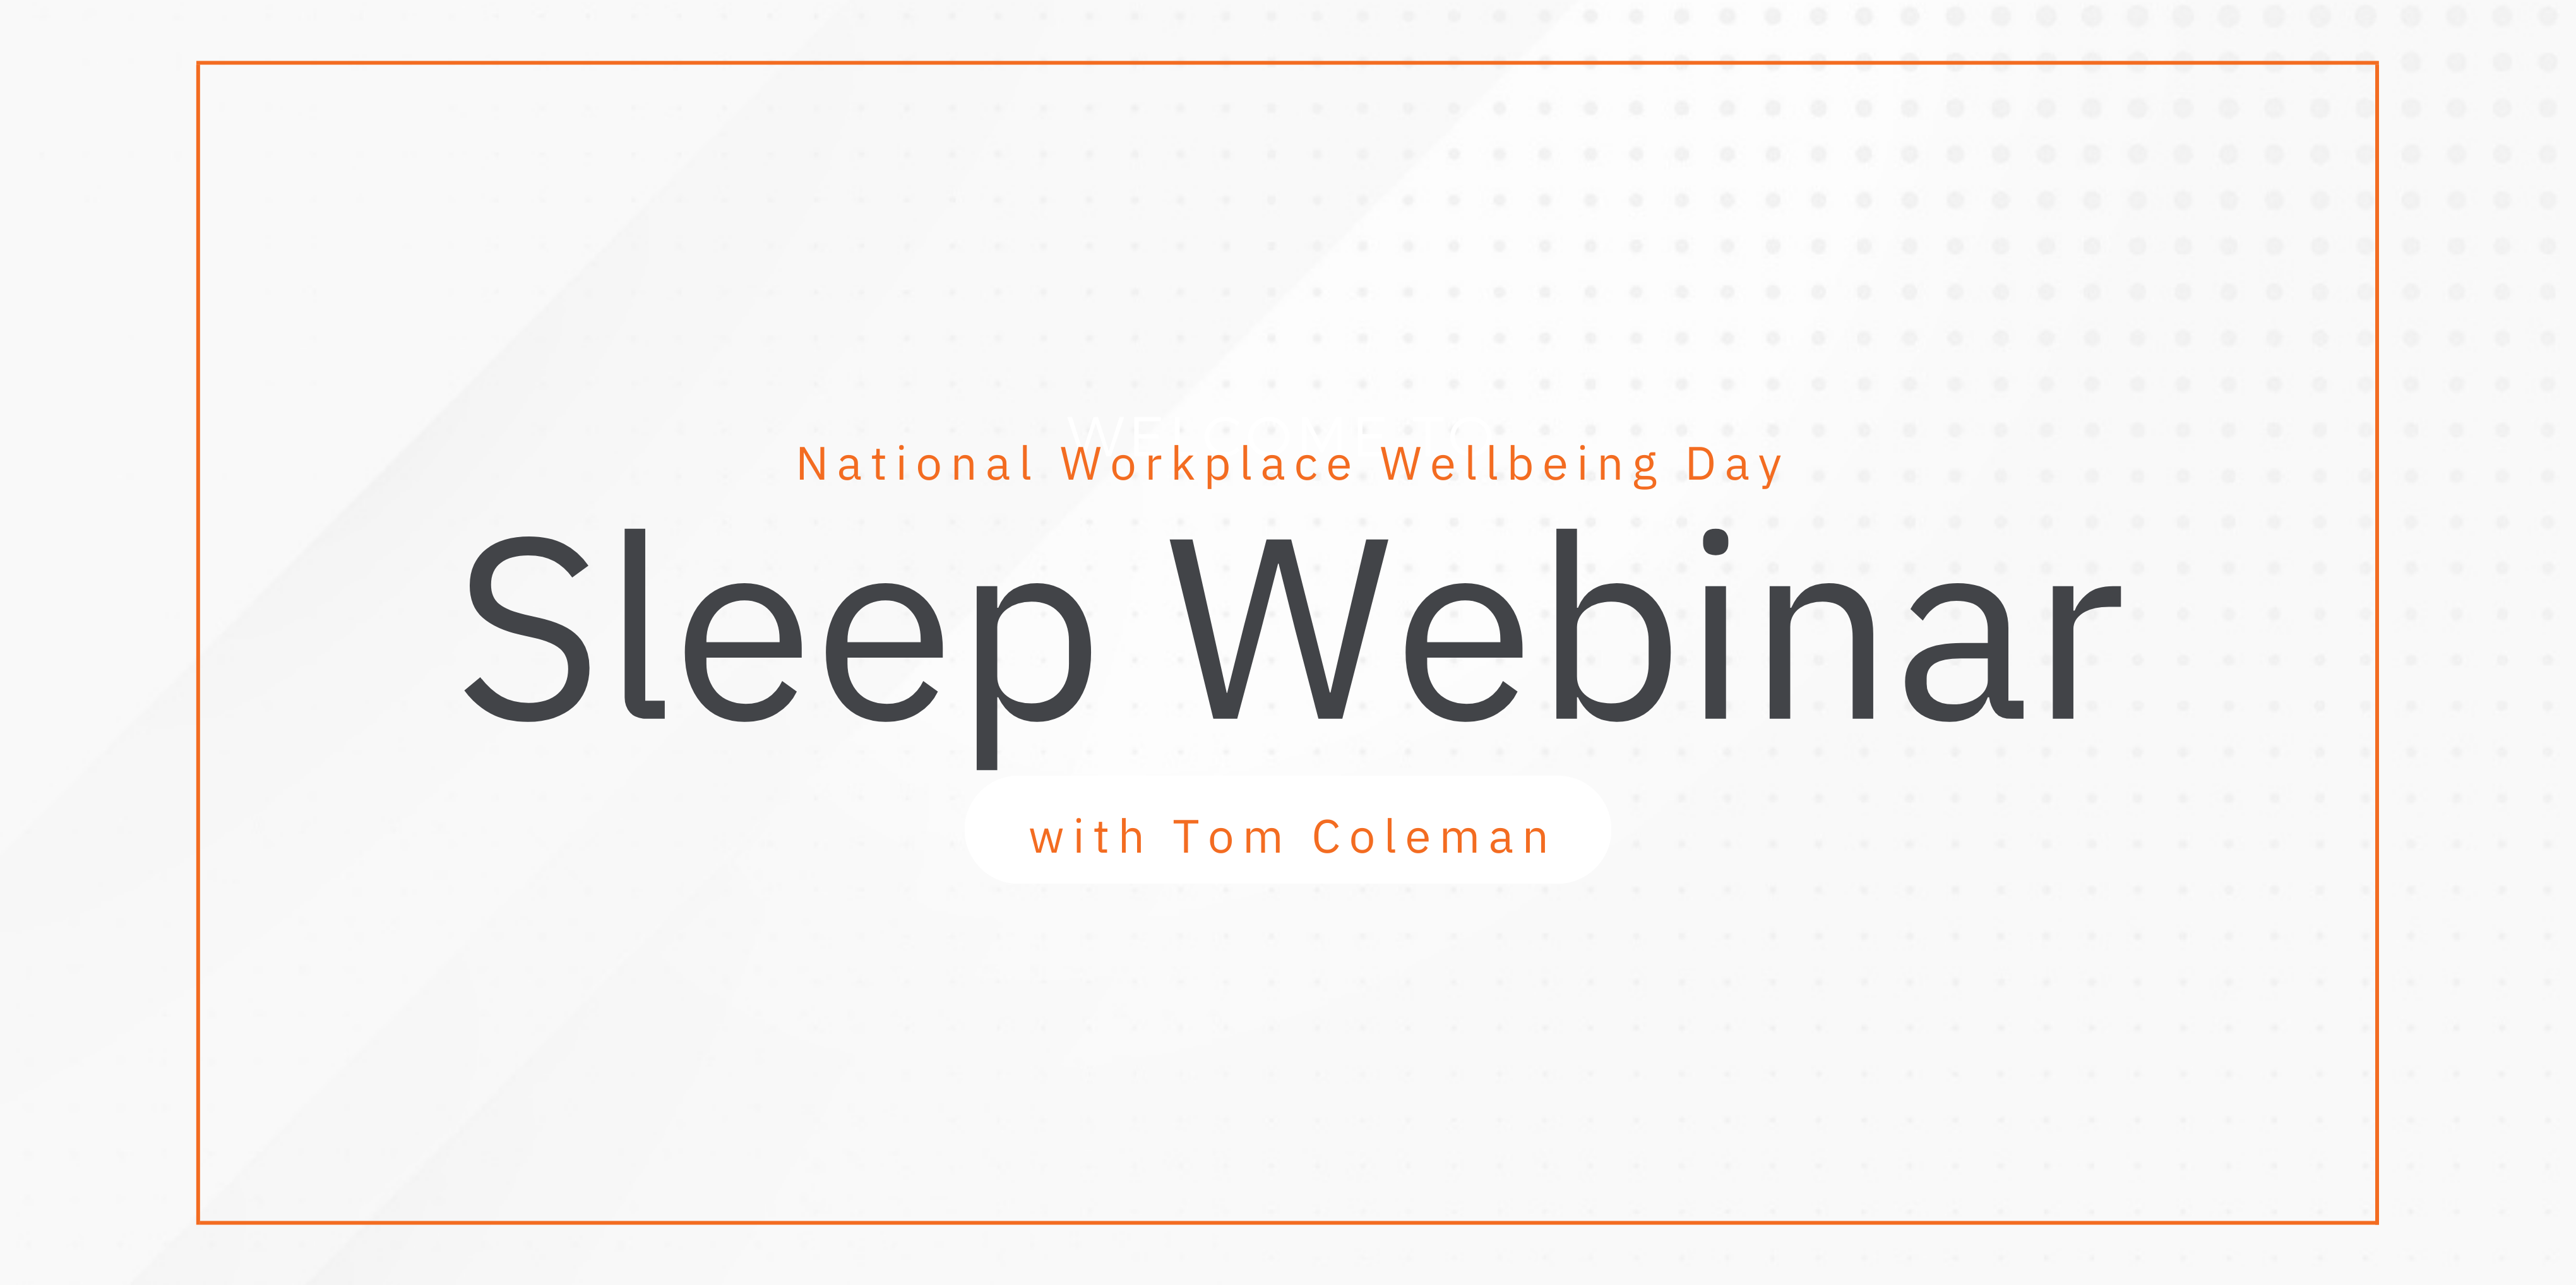 Sleep Webinar for National Workplace Wellbeing Day